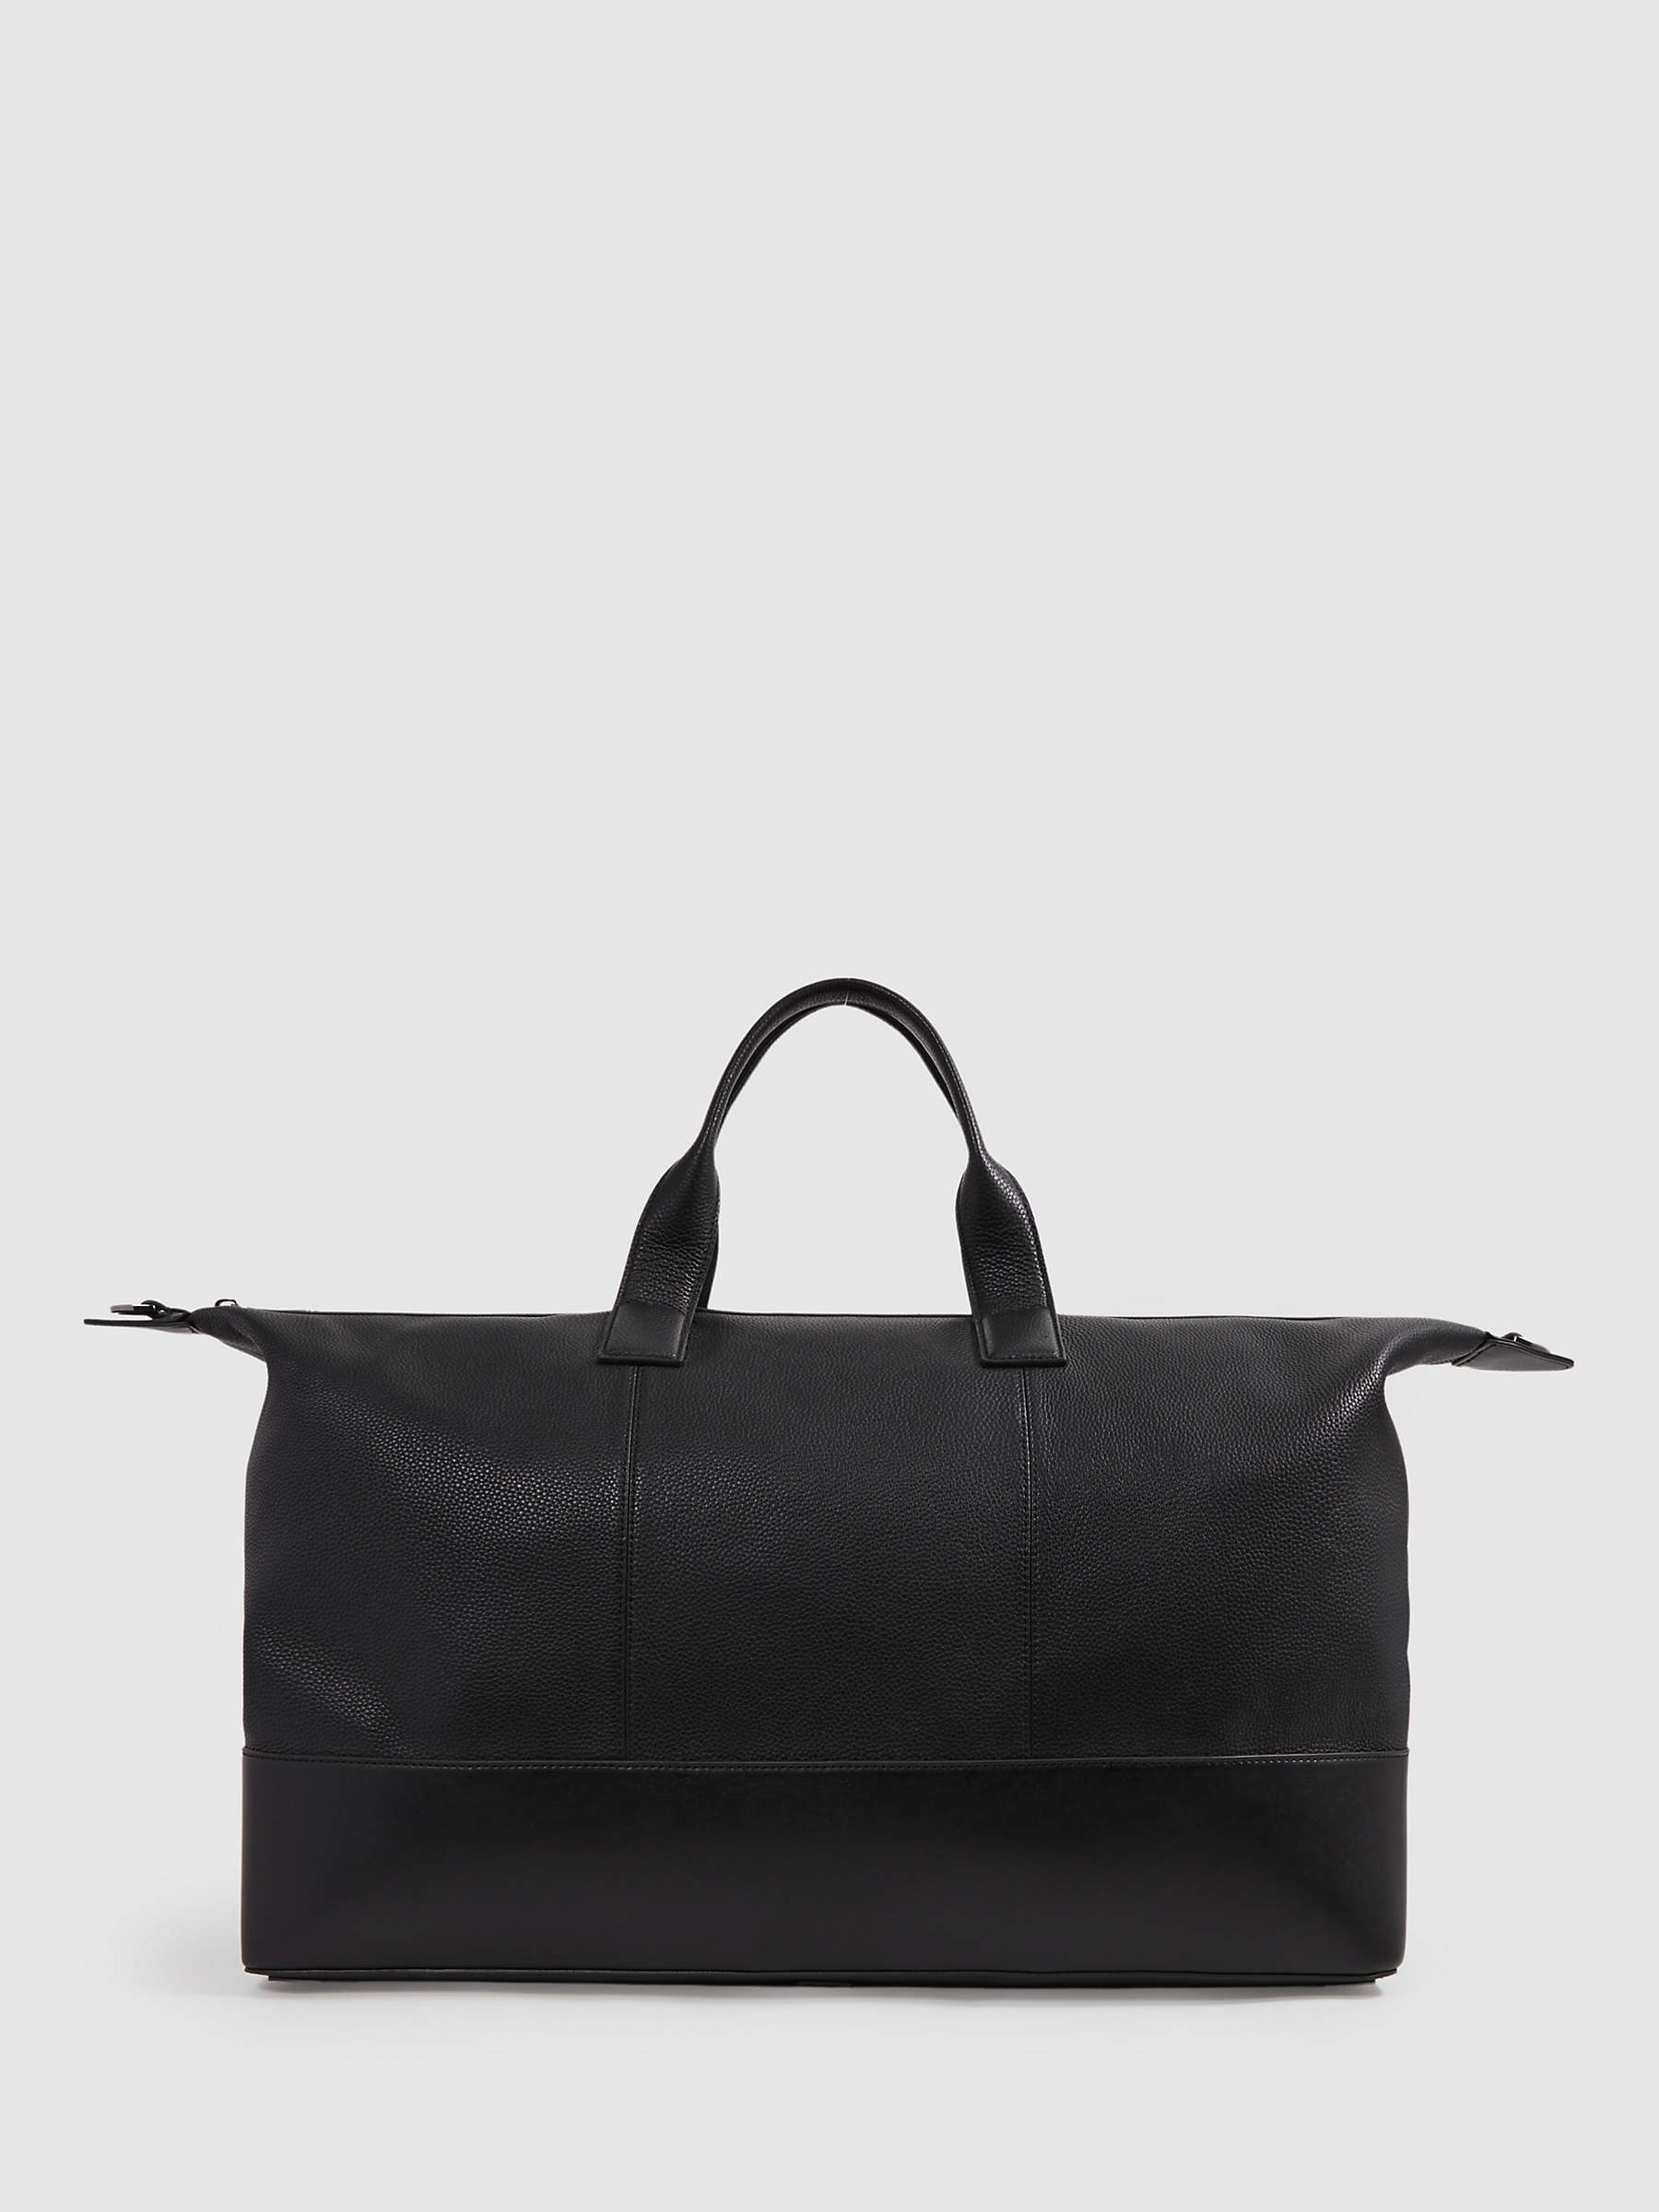 Reiss Carter Travel Bag, Black at John Lewis & Partners